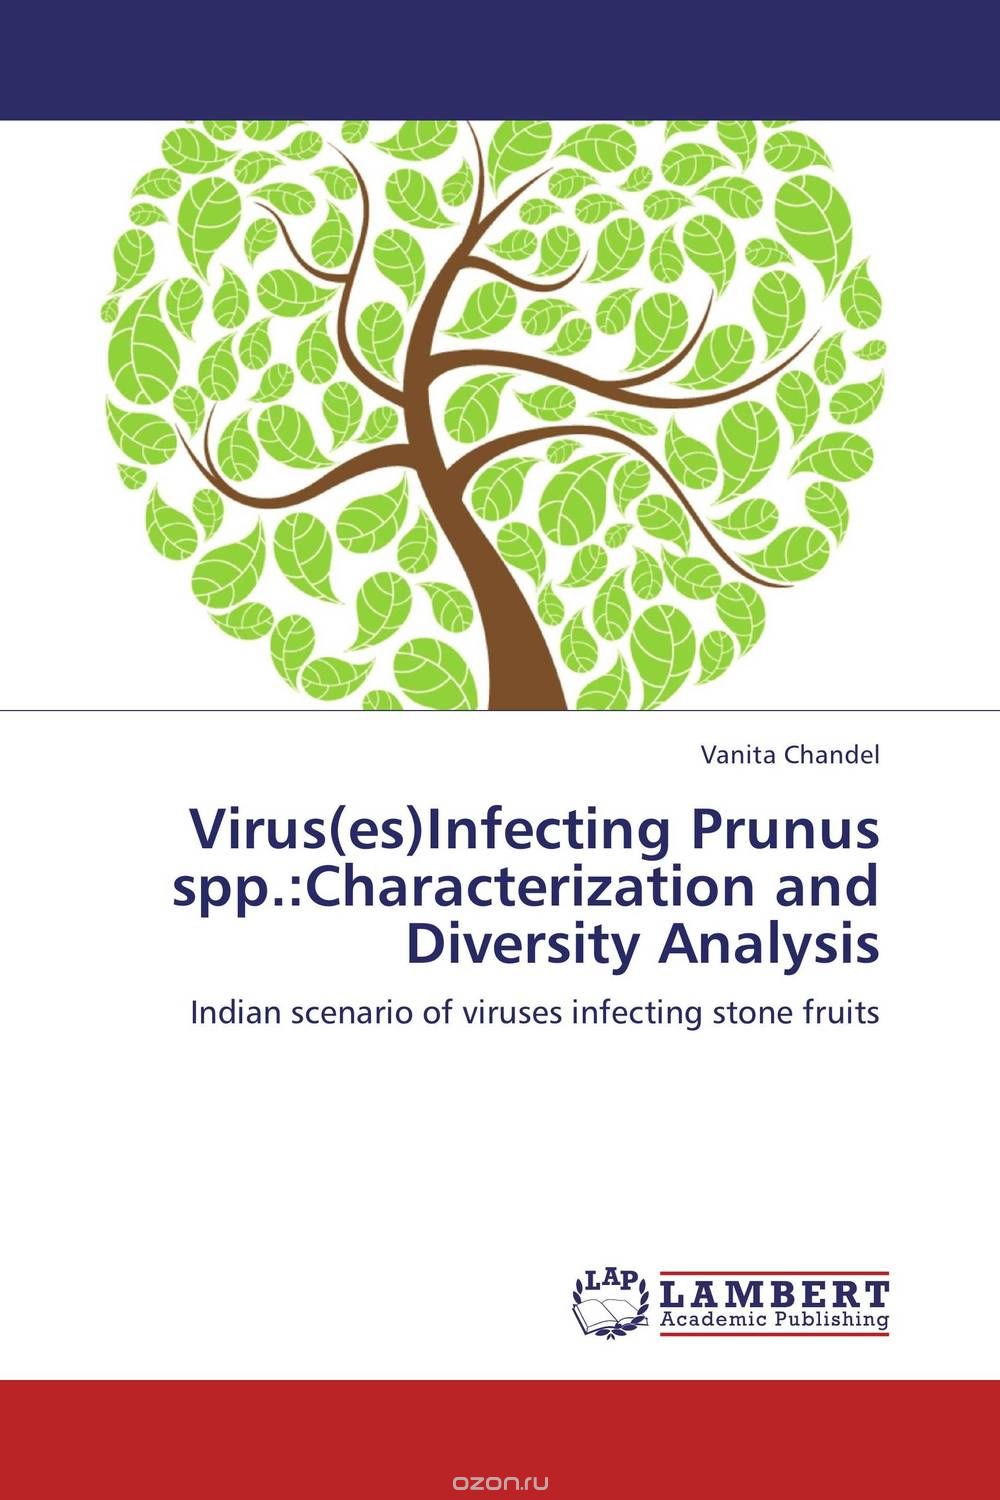 Скачать книгу "Virus(es)Infecting Prunus spp.:Characterization and Diversity Analysis"